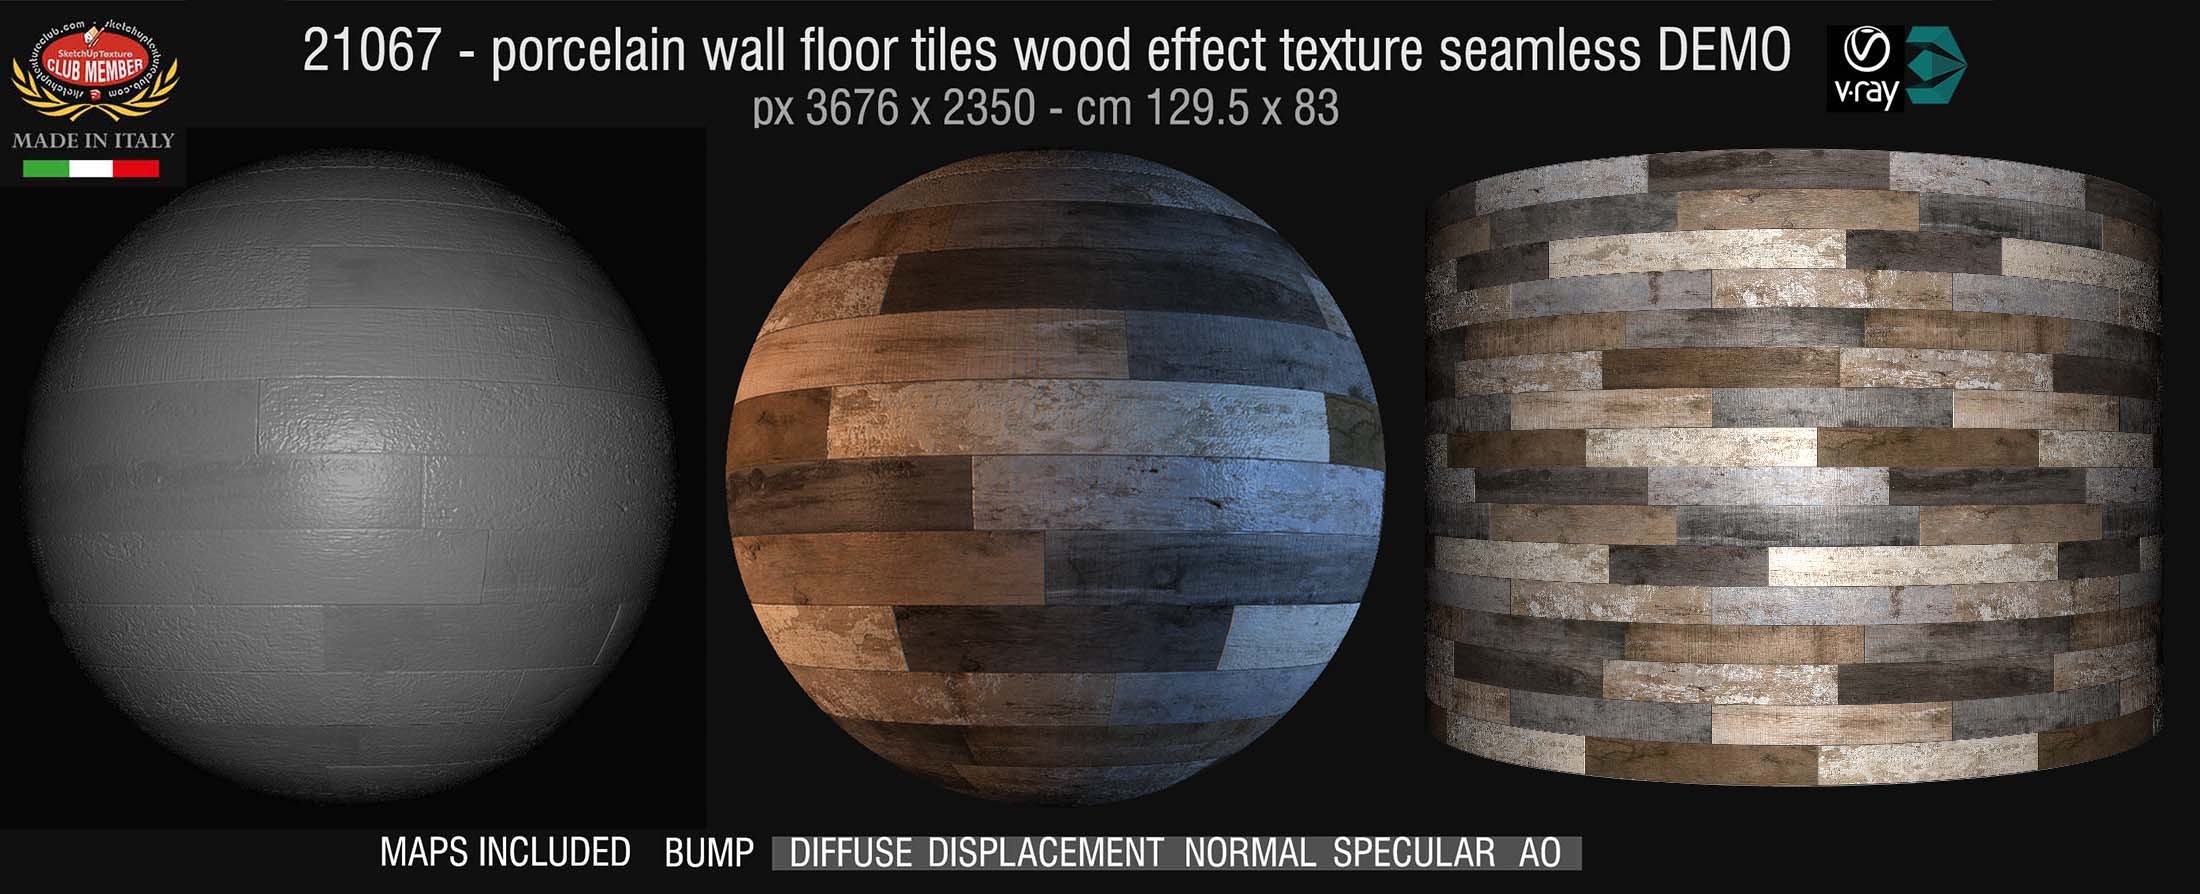 21068 Porcelain wall floor tiles wood effect PBR texture seamless + maps DEMO